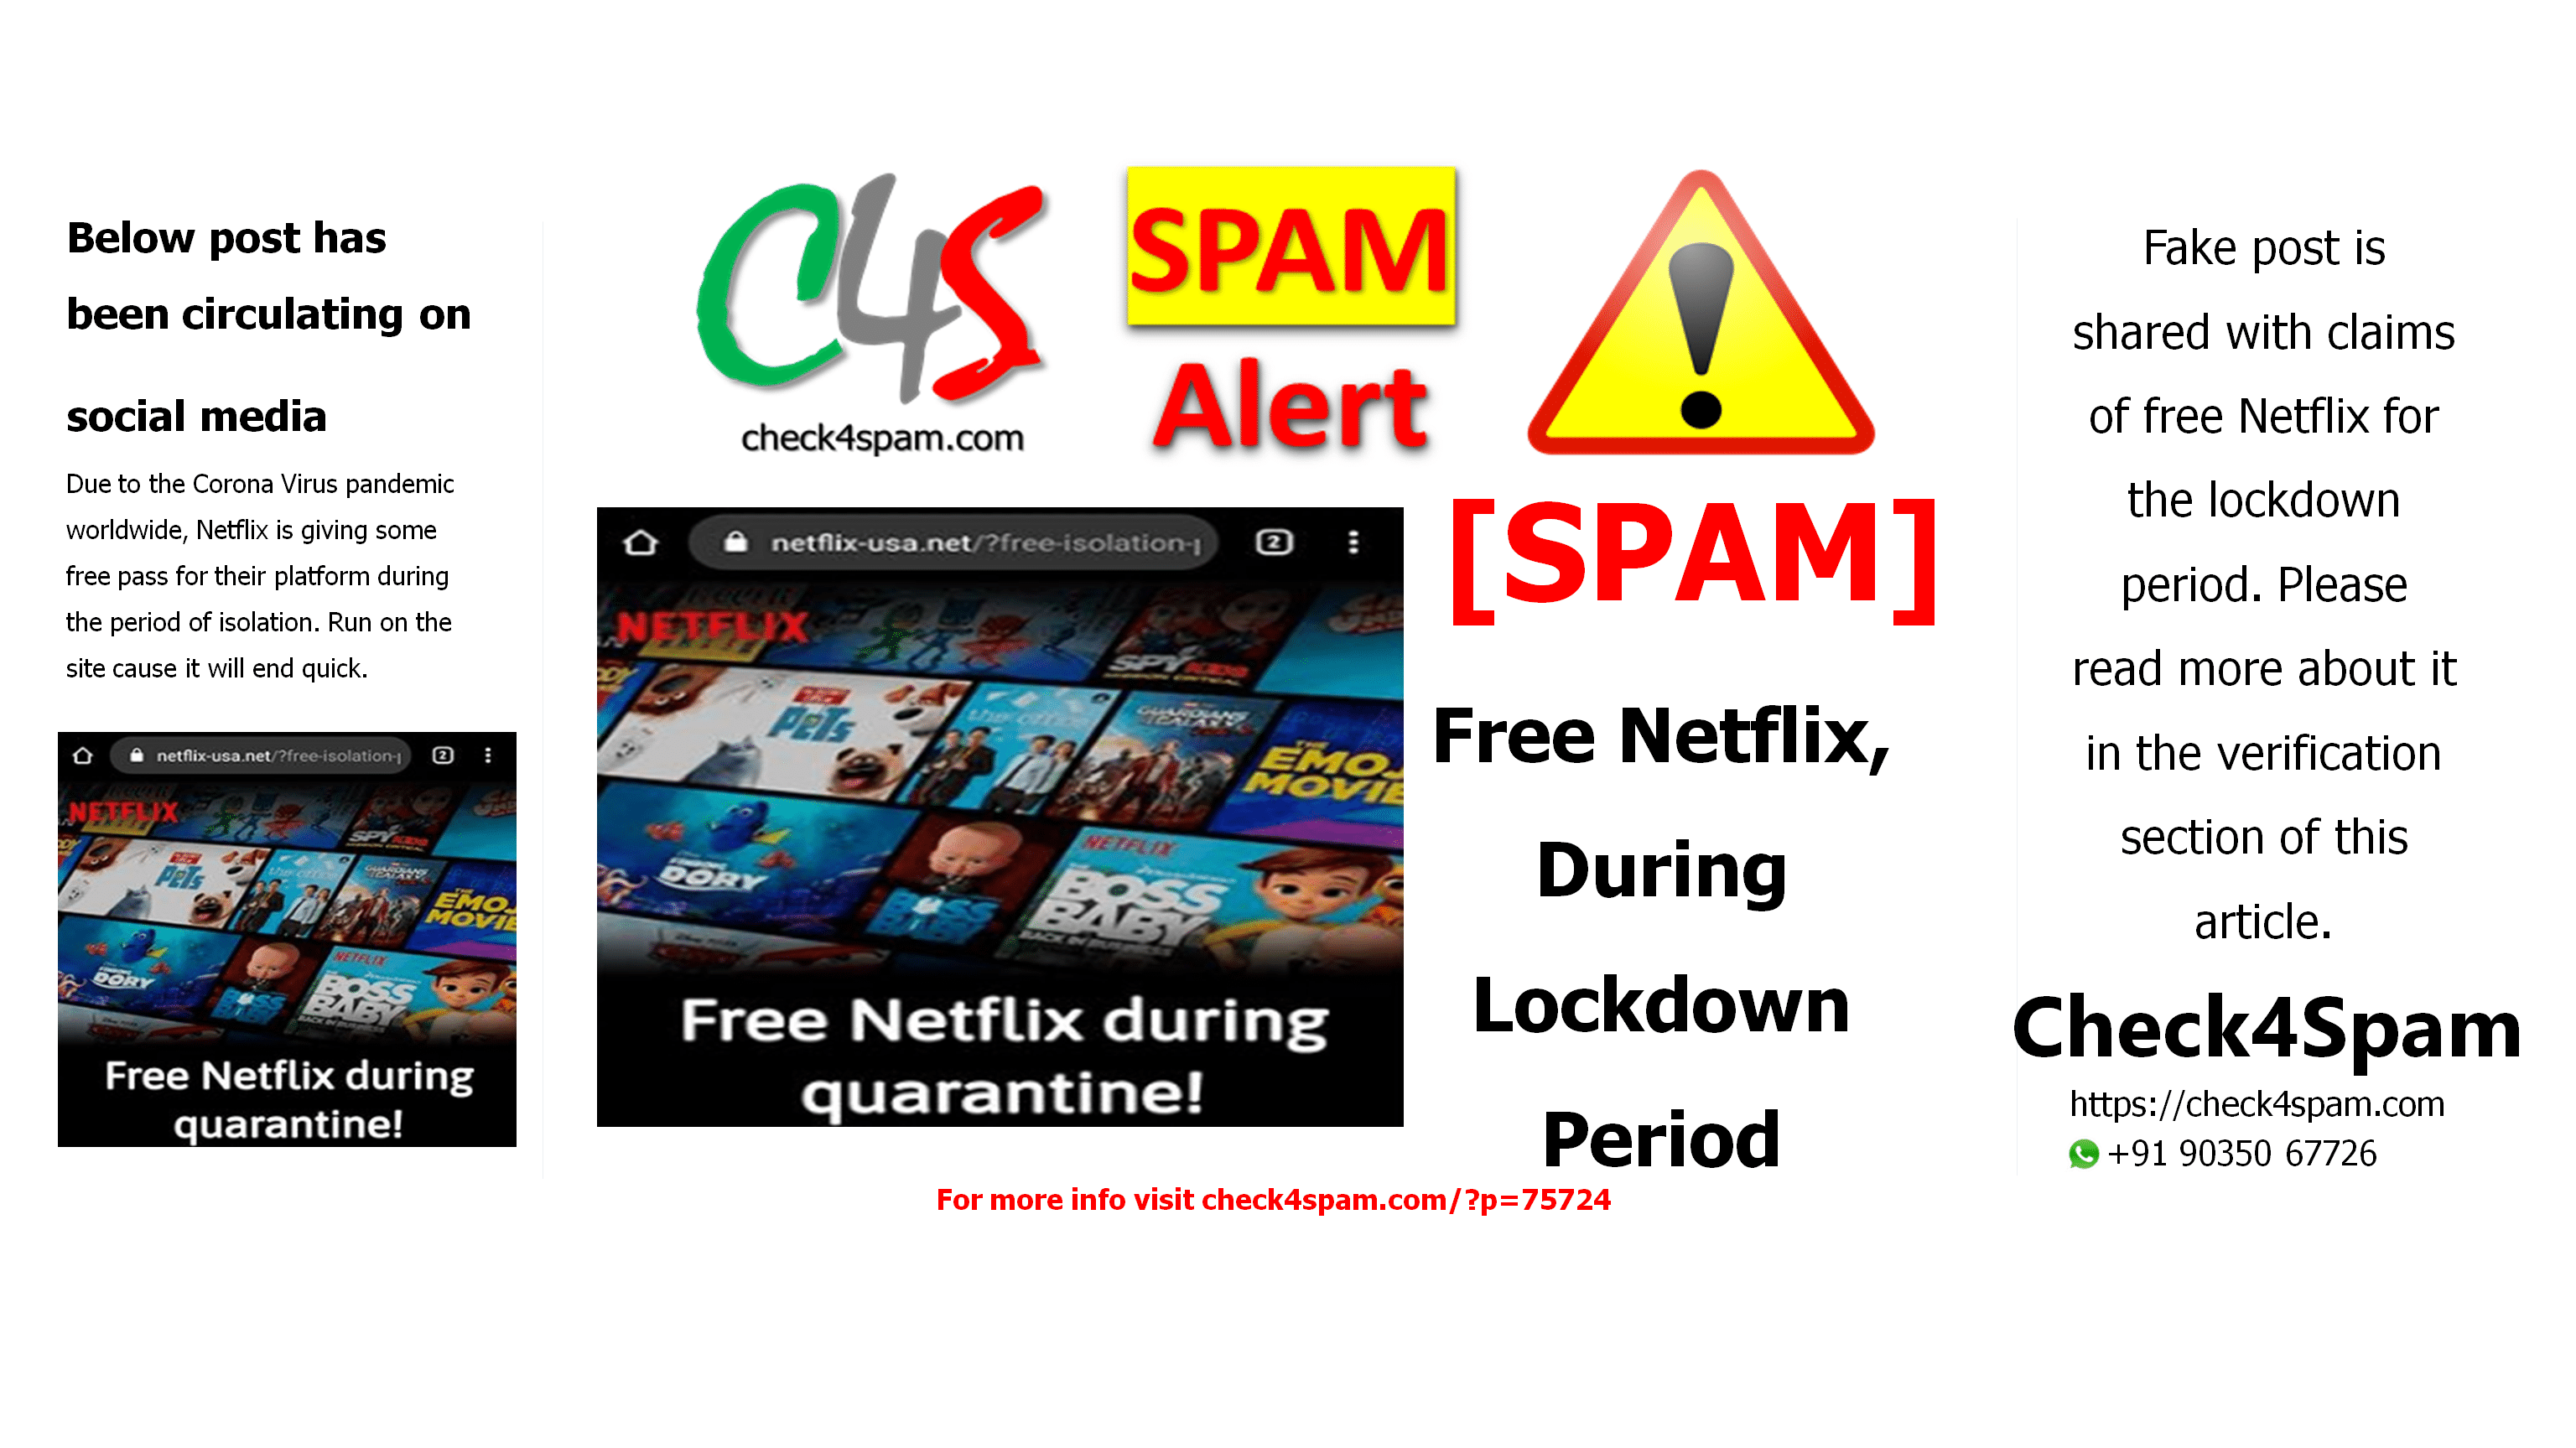 Free Netflix During Lockdown Period